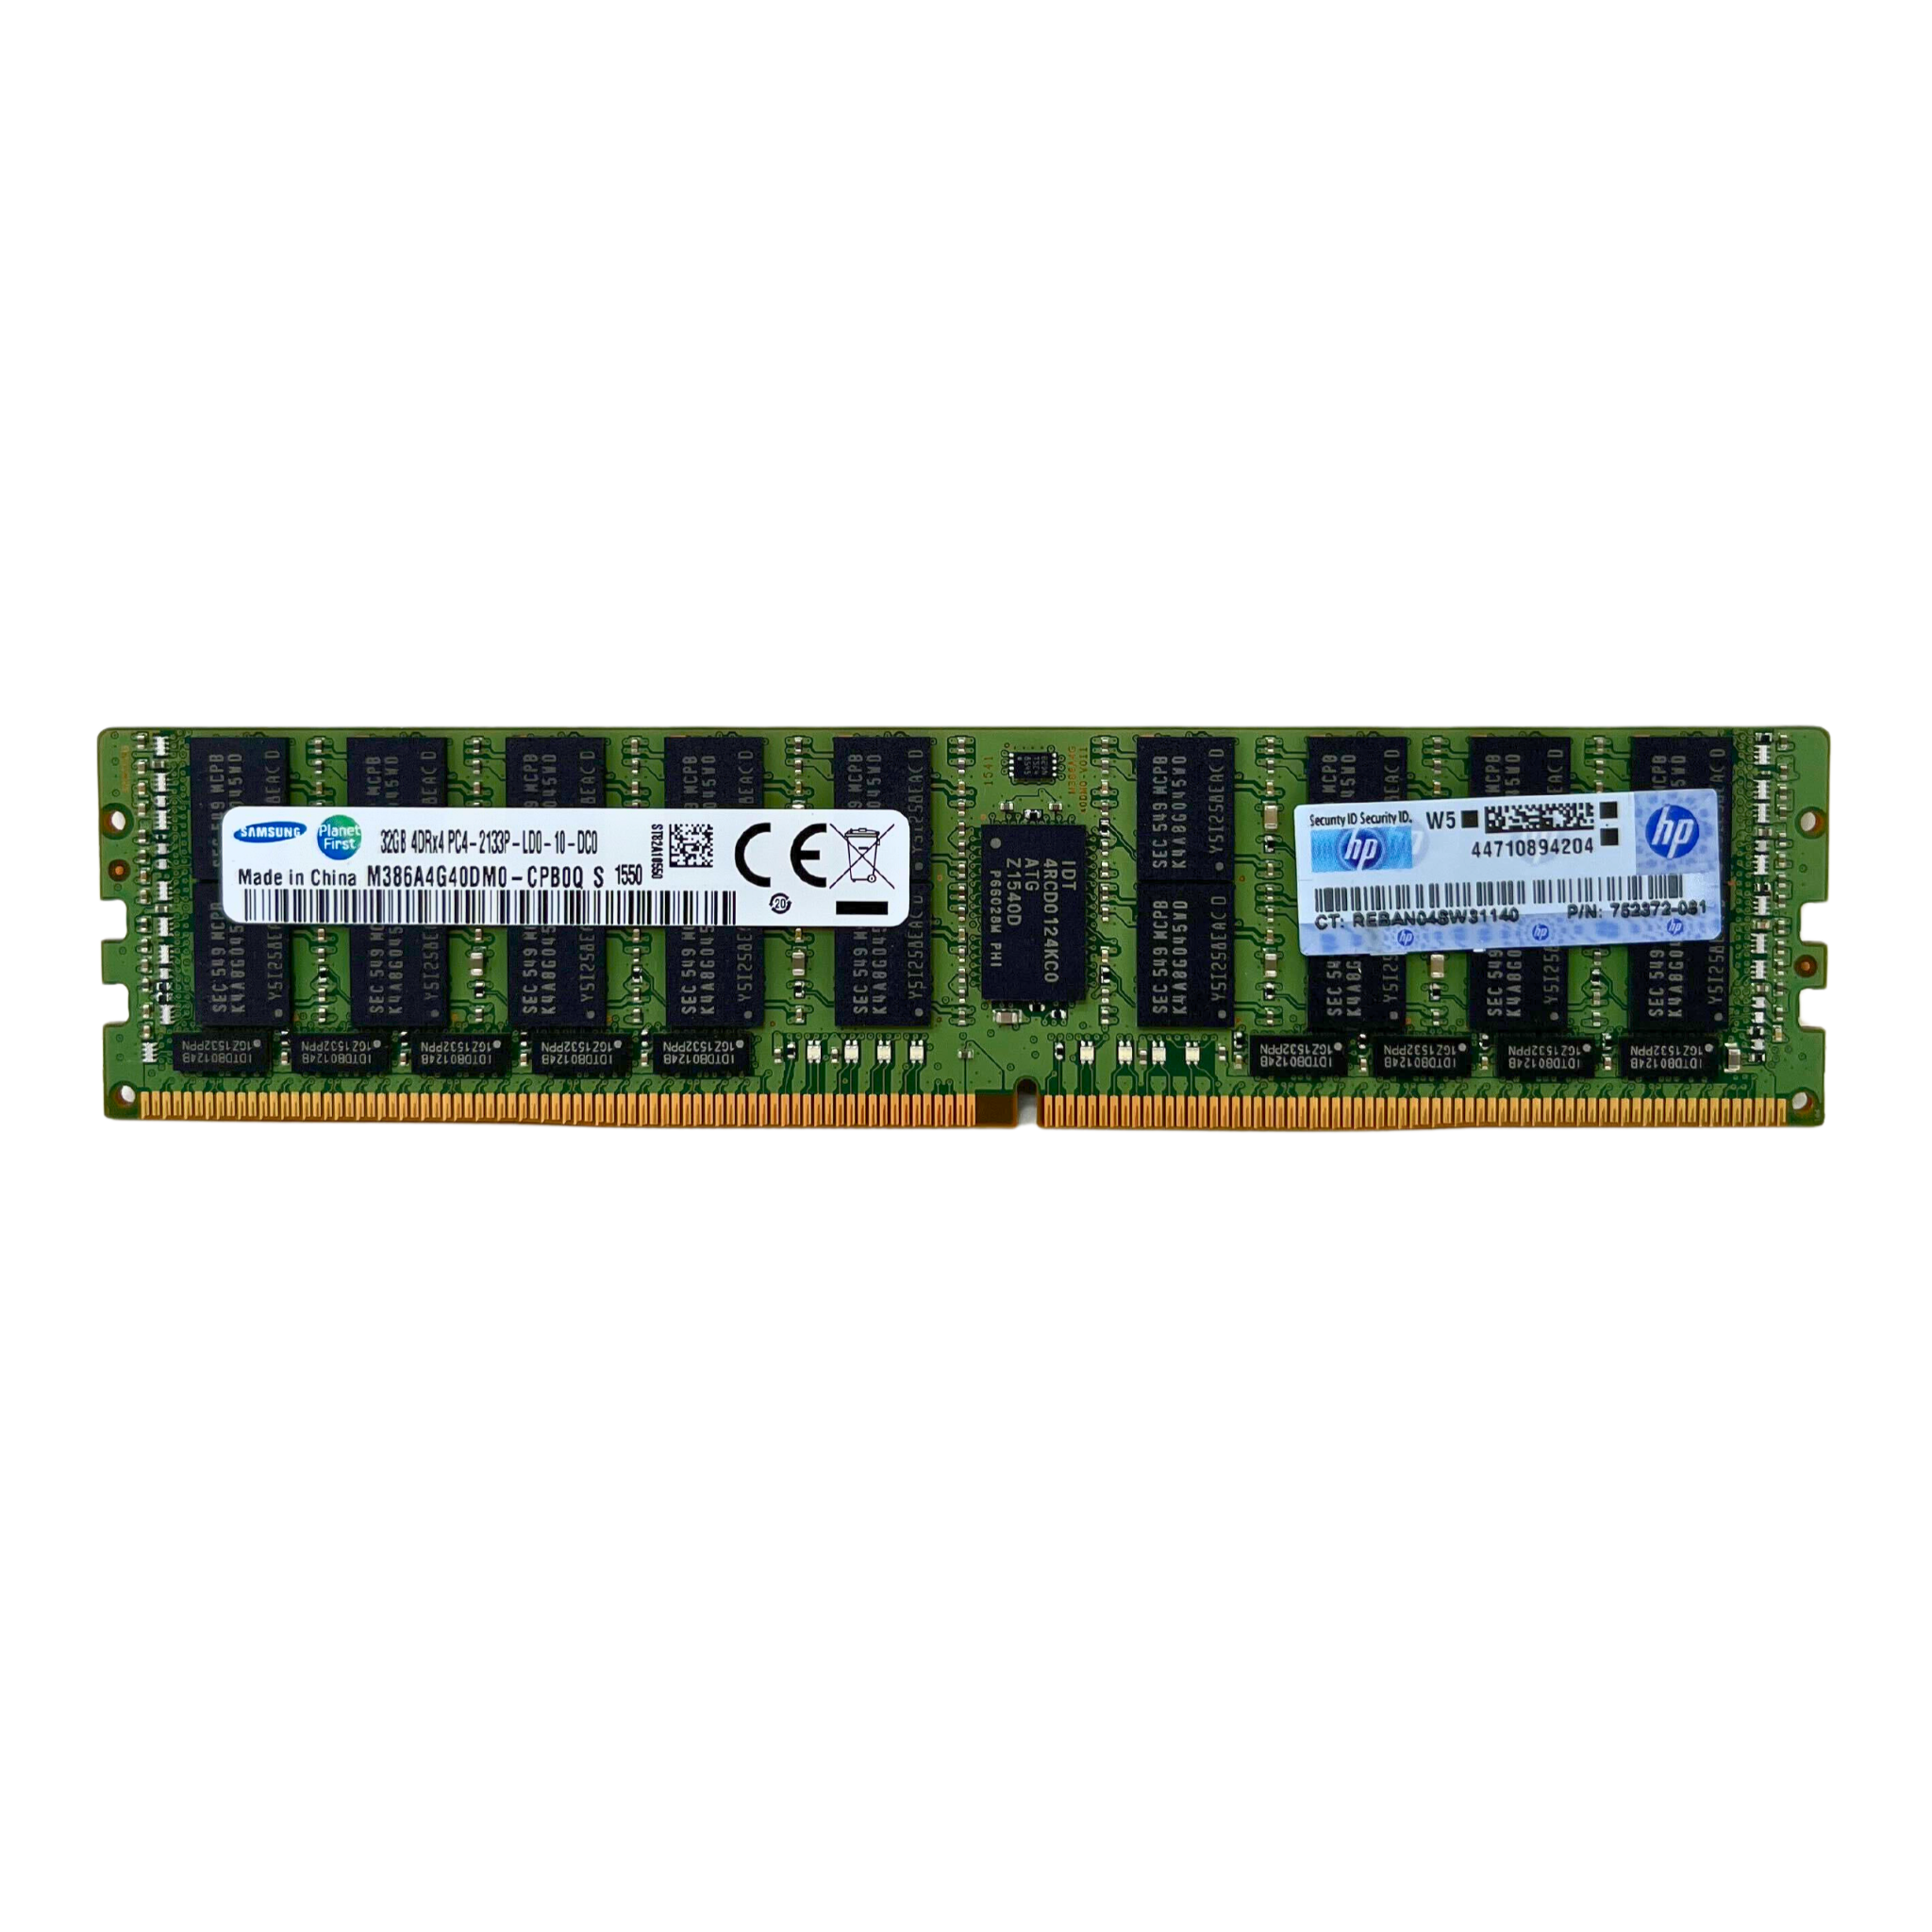 HP 32GB 4DRx4 PC4-2133P-L DDR4 LRDIMM ECC REG RAM (HMA84GL7AMR4N-TF TE AA - 752372-081)